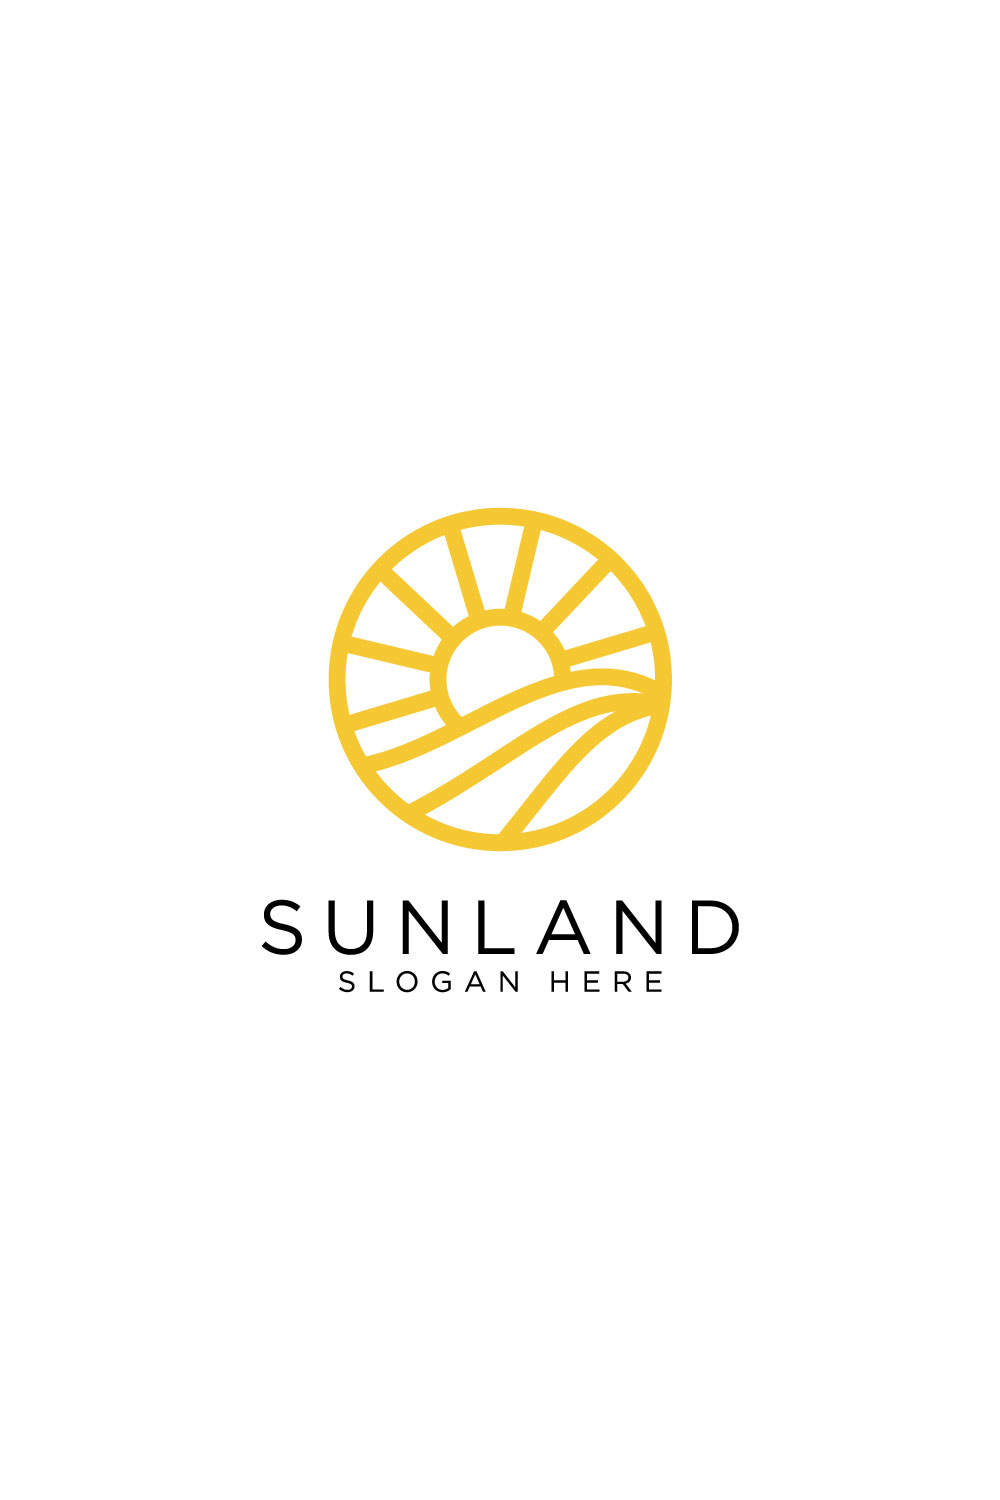 sun and landscape logo design vector pinterest preview image.